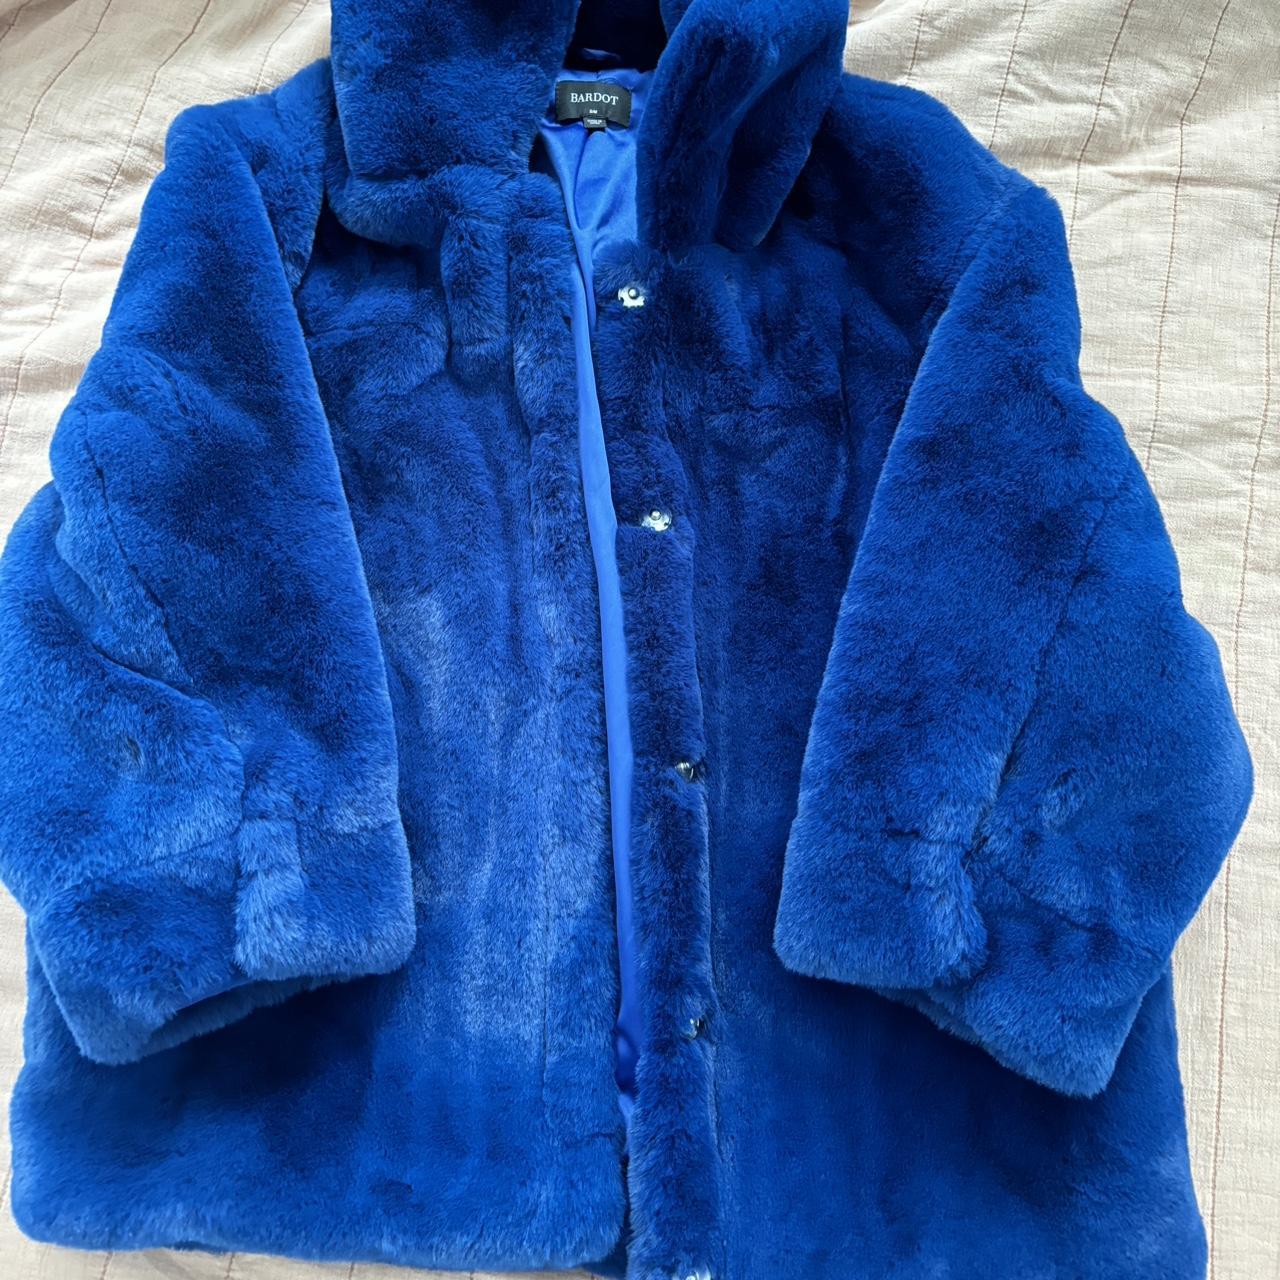 Bardot blue fluffy coat Never worn Great condition - Depop